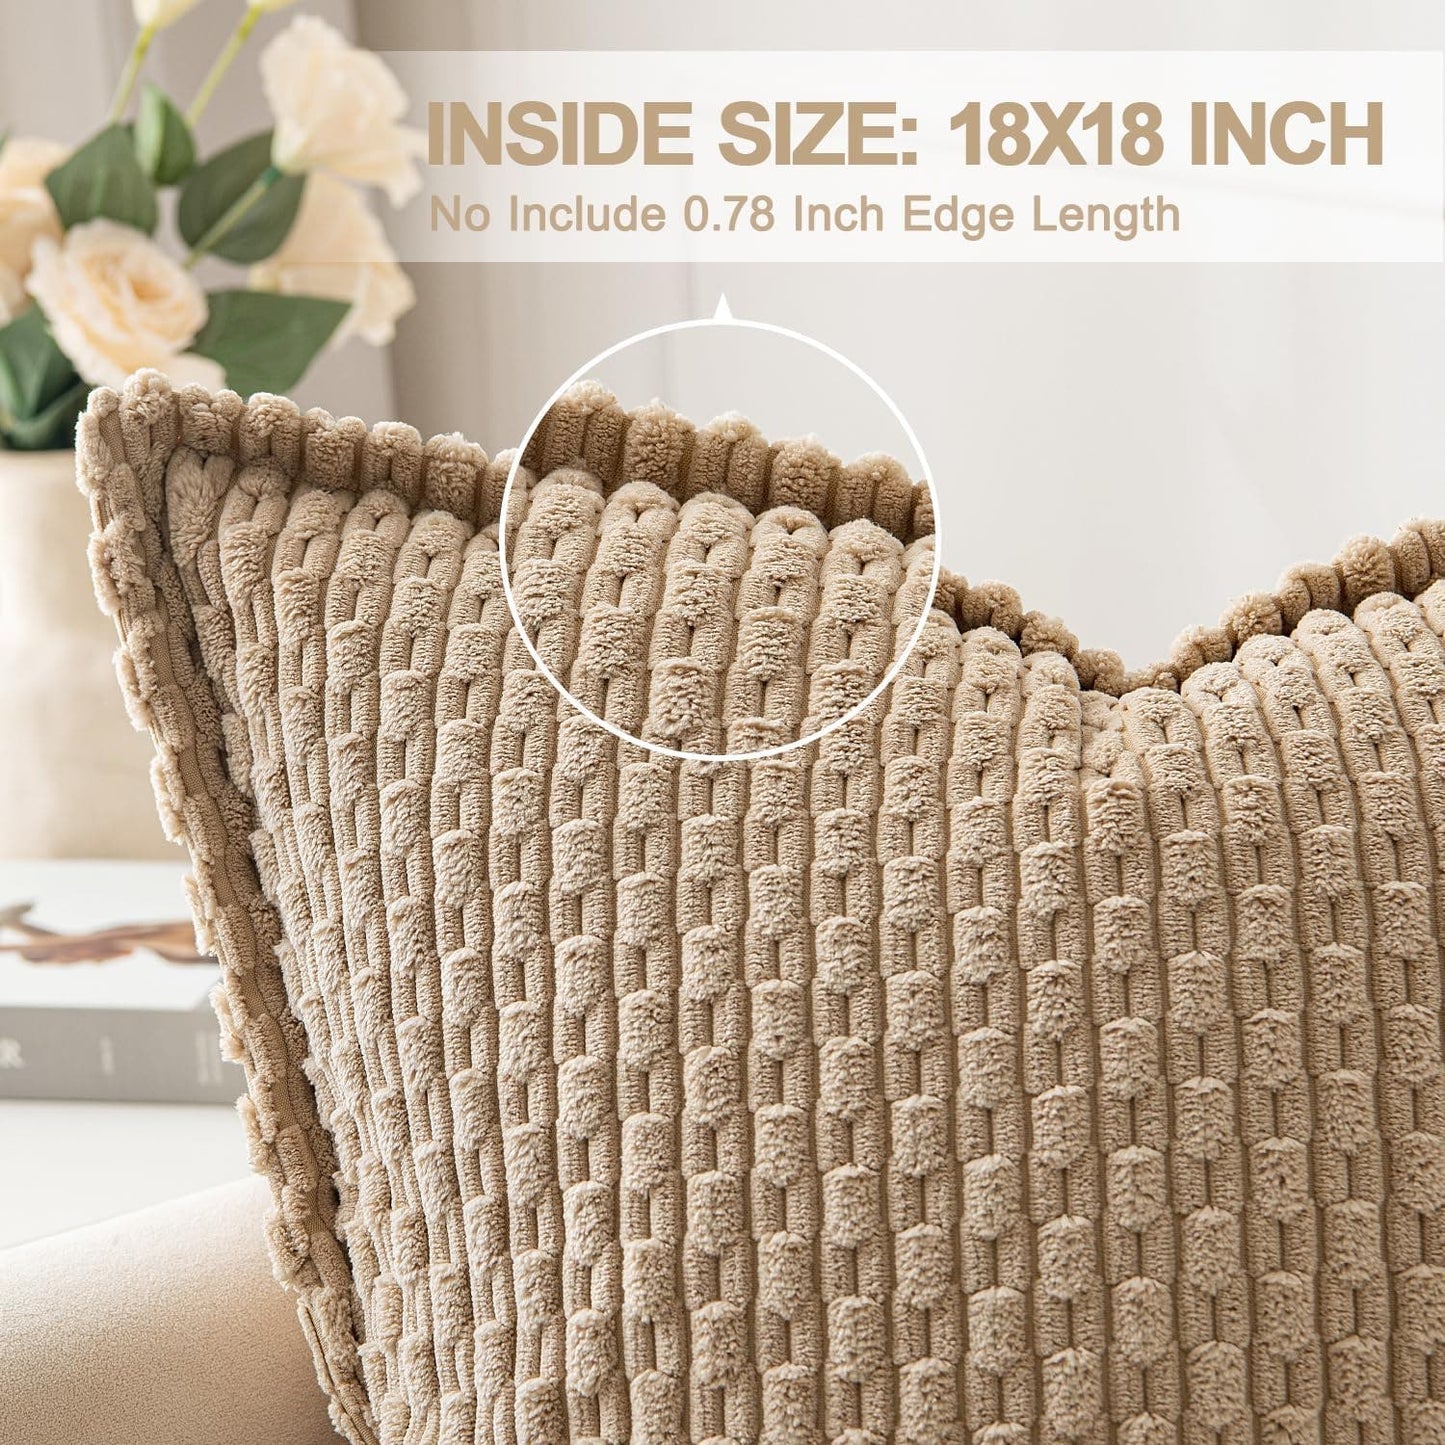 MIULEE Brown/Tan Corduroy Pillow Covers 18x18 Inch Set of 2, Super Soft BOHO